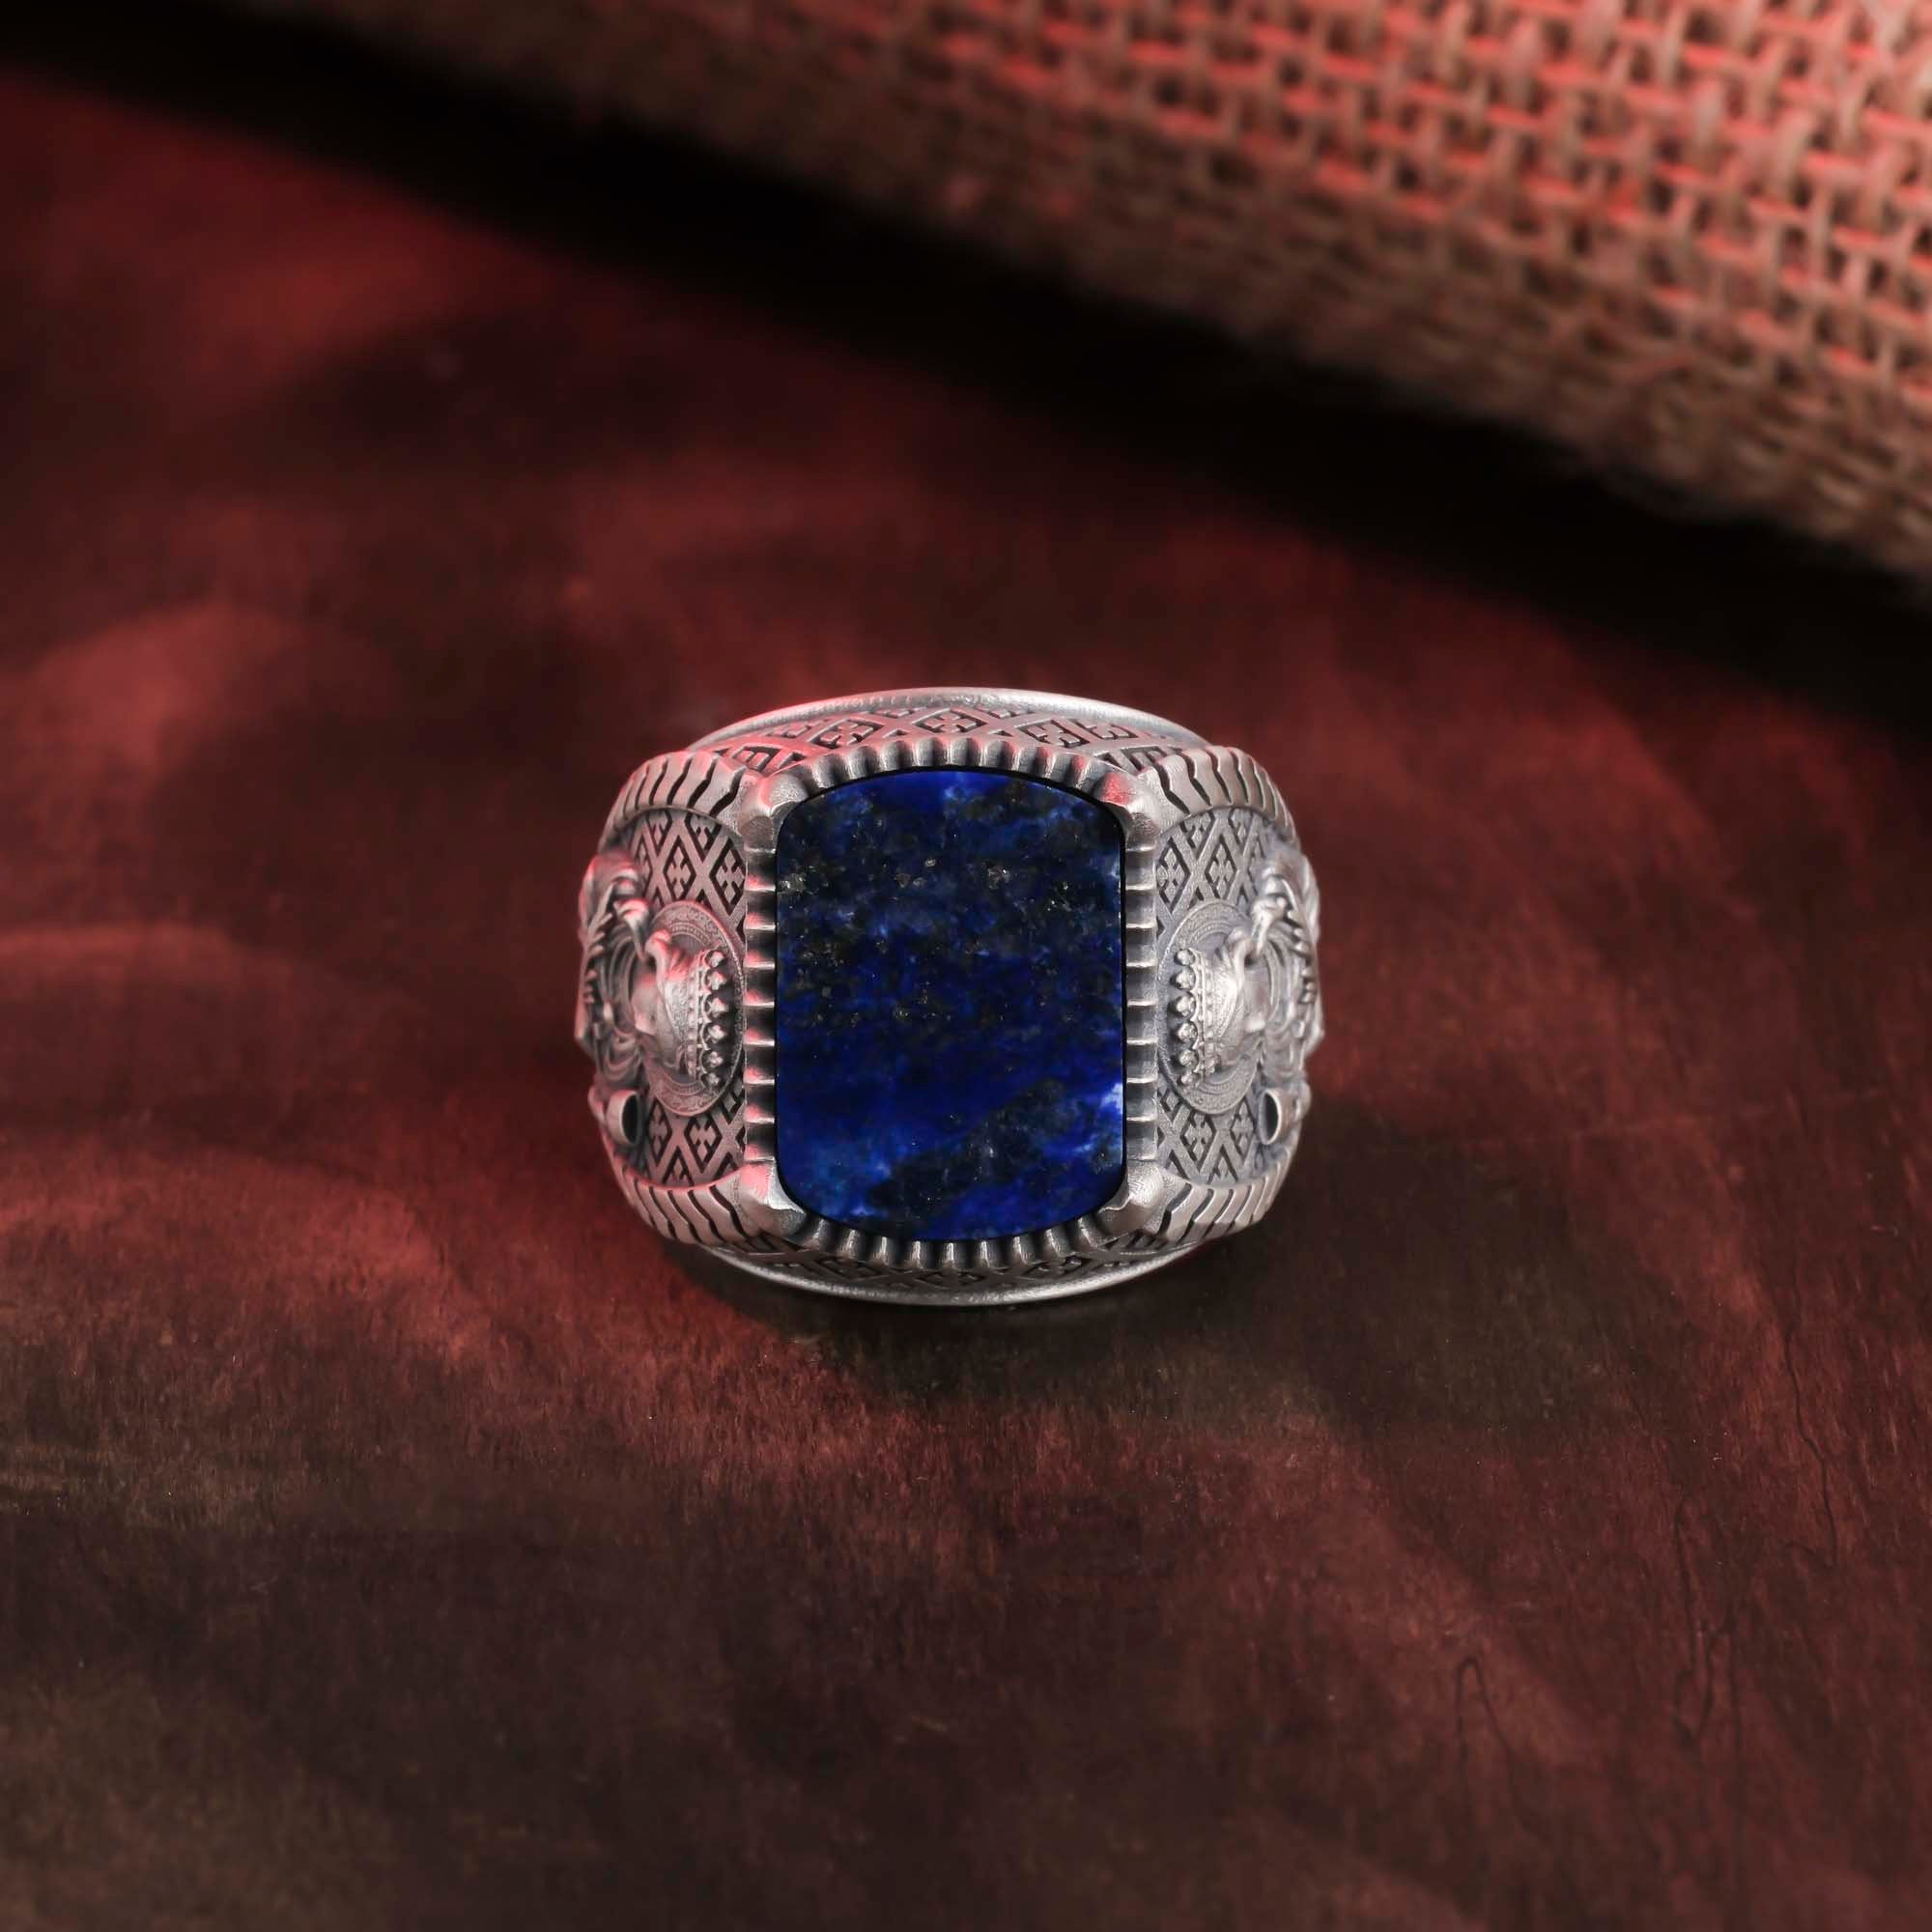 Holy Mother Mary Ring, Men's Gemstone Ring, Religious Gift, Onyx Ring, Red Agate Ring, Tiger's Eye Ring, Lapis Lazuli Ring